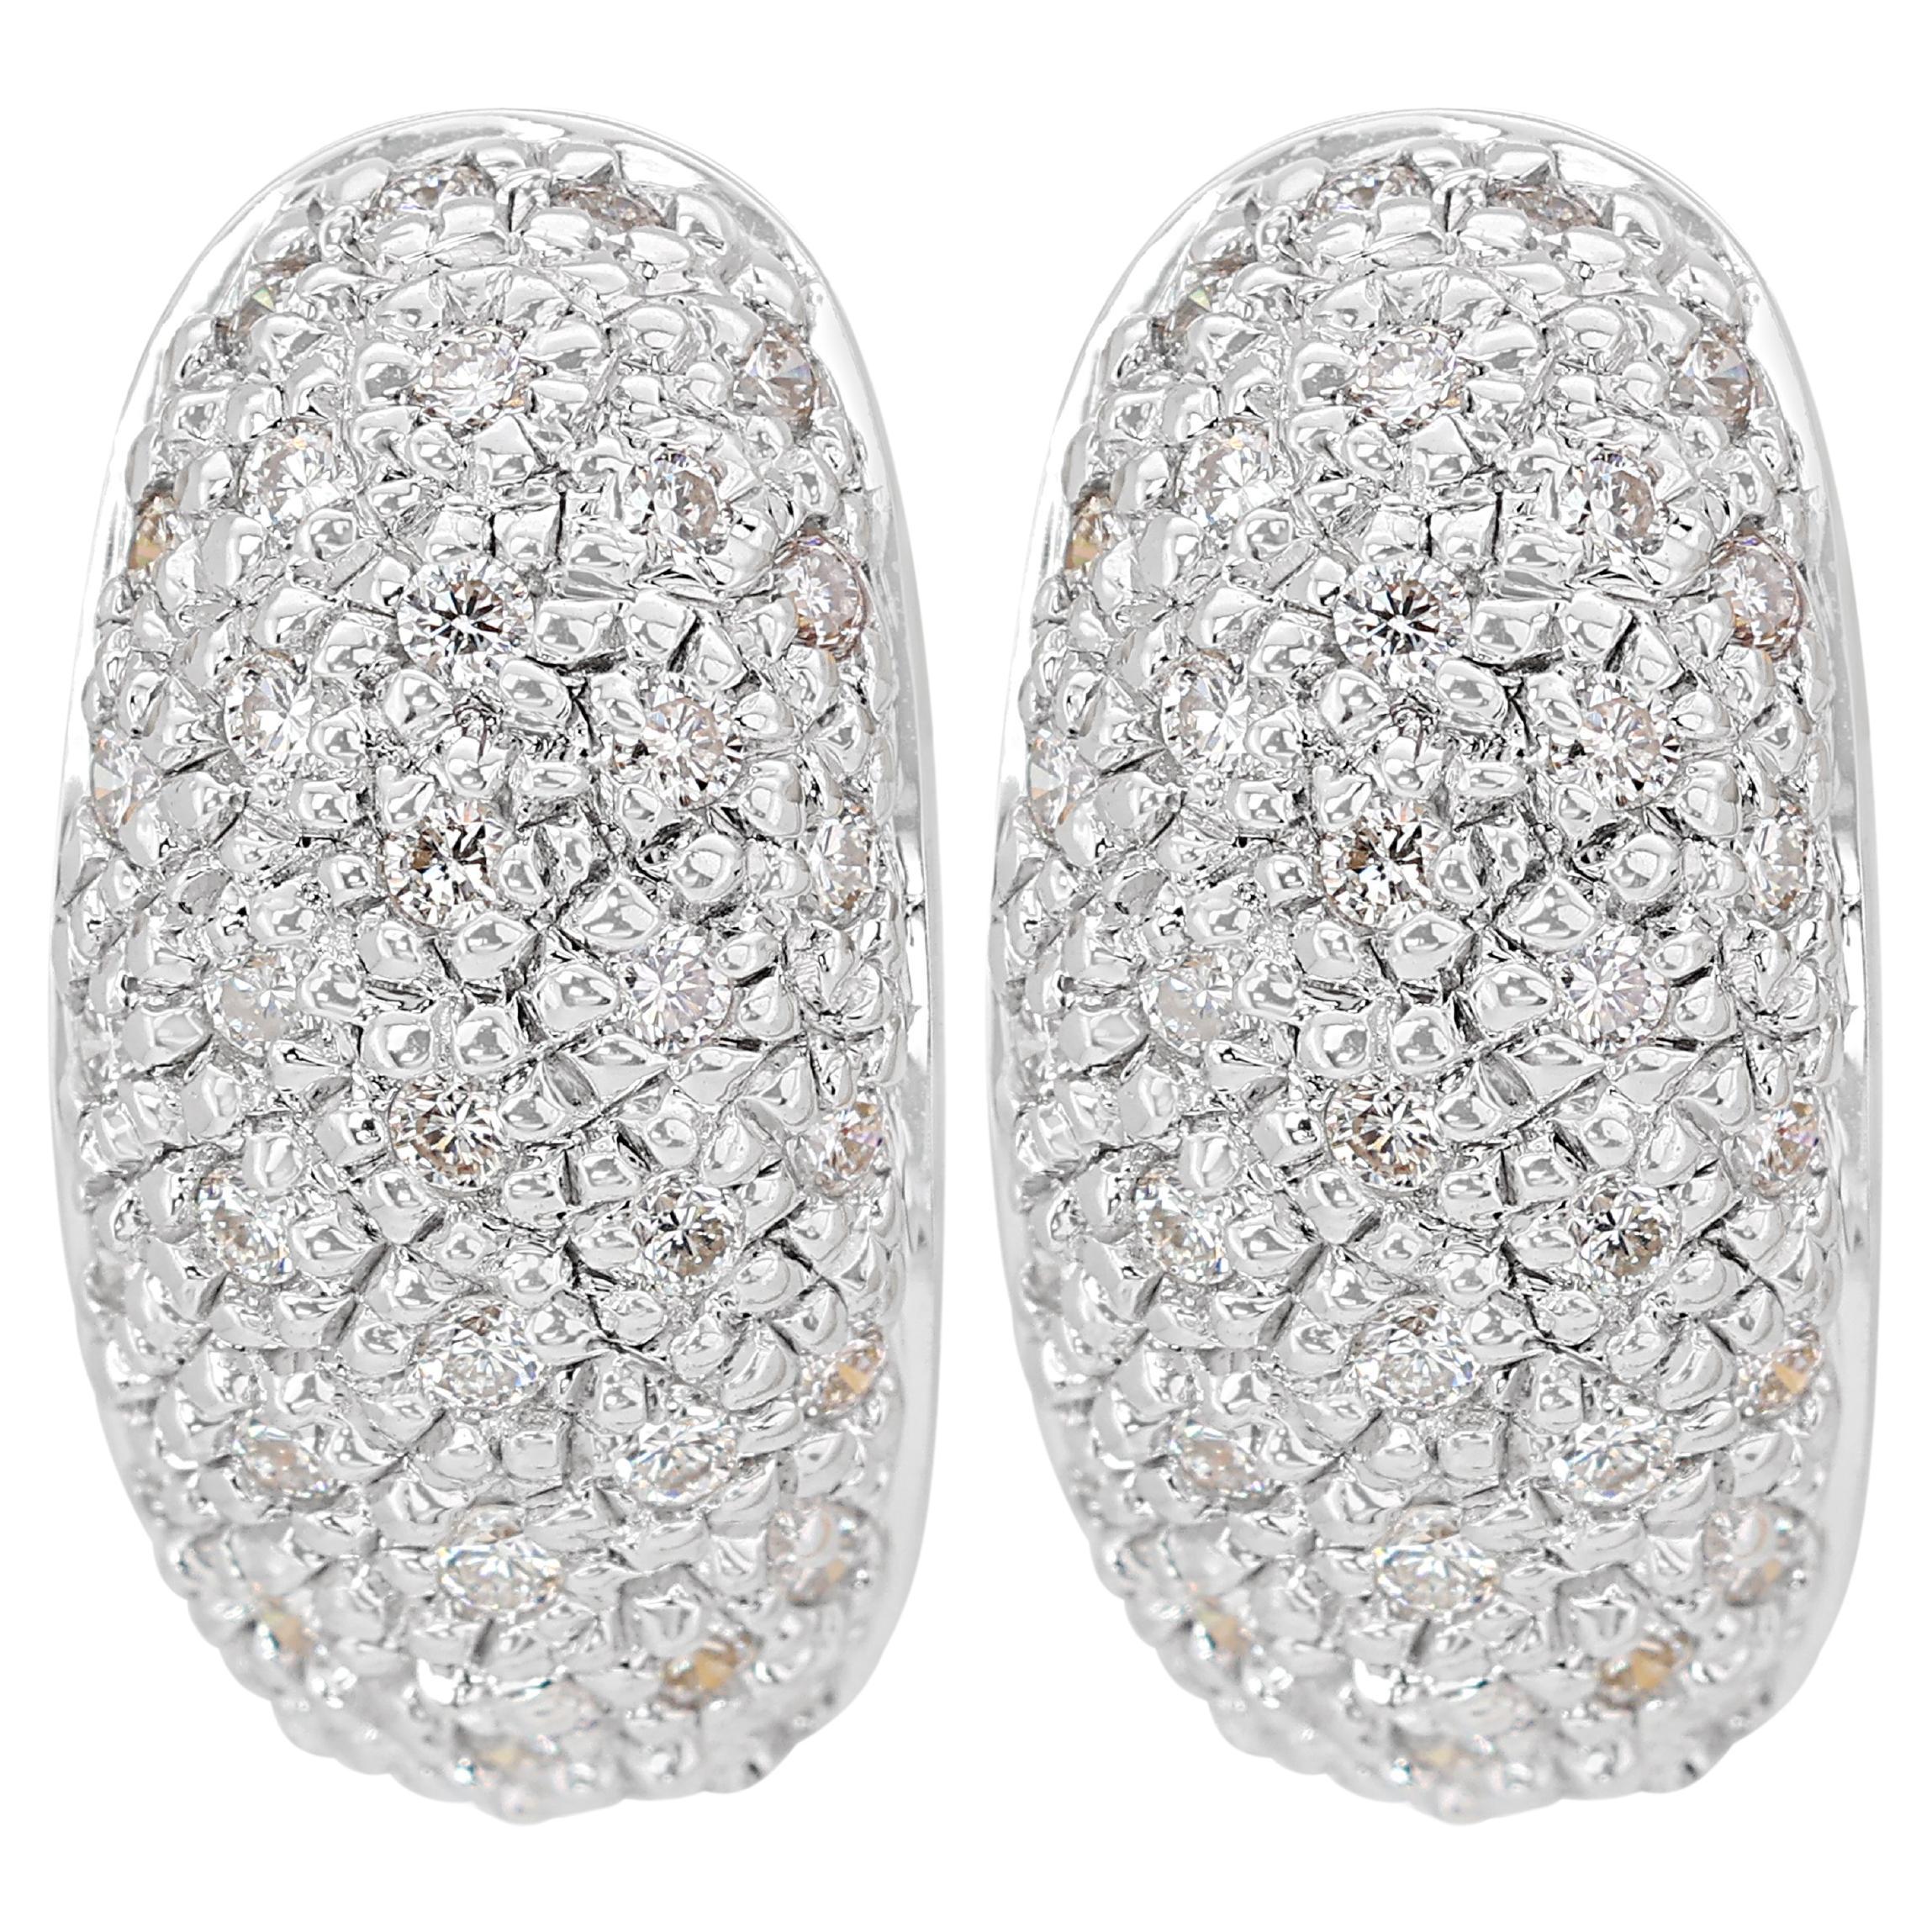 Fascinating 0.40ct Diamond Earrings in 18k White Gold